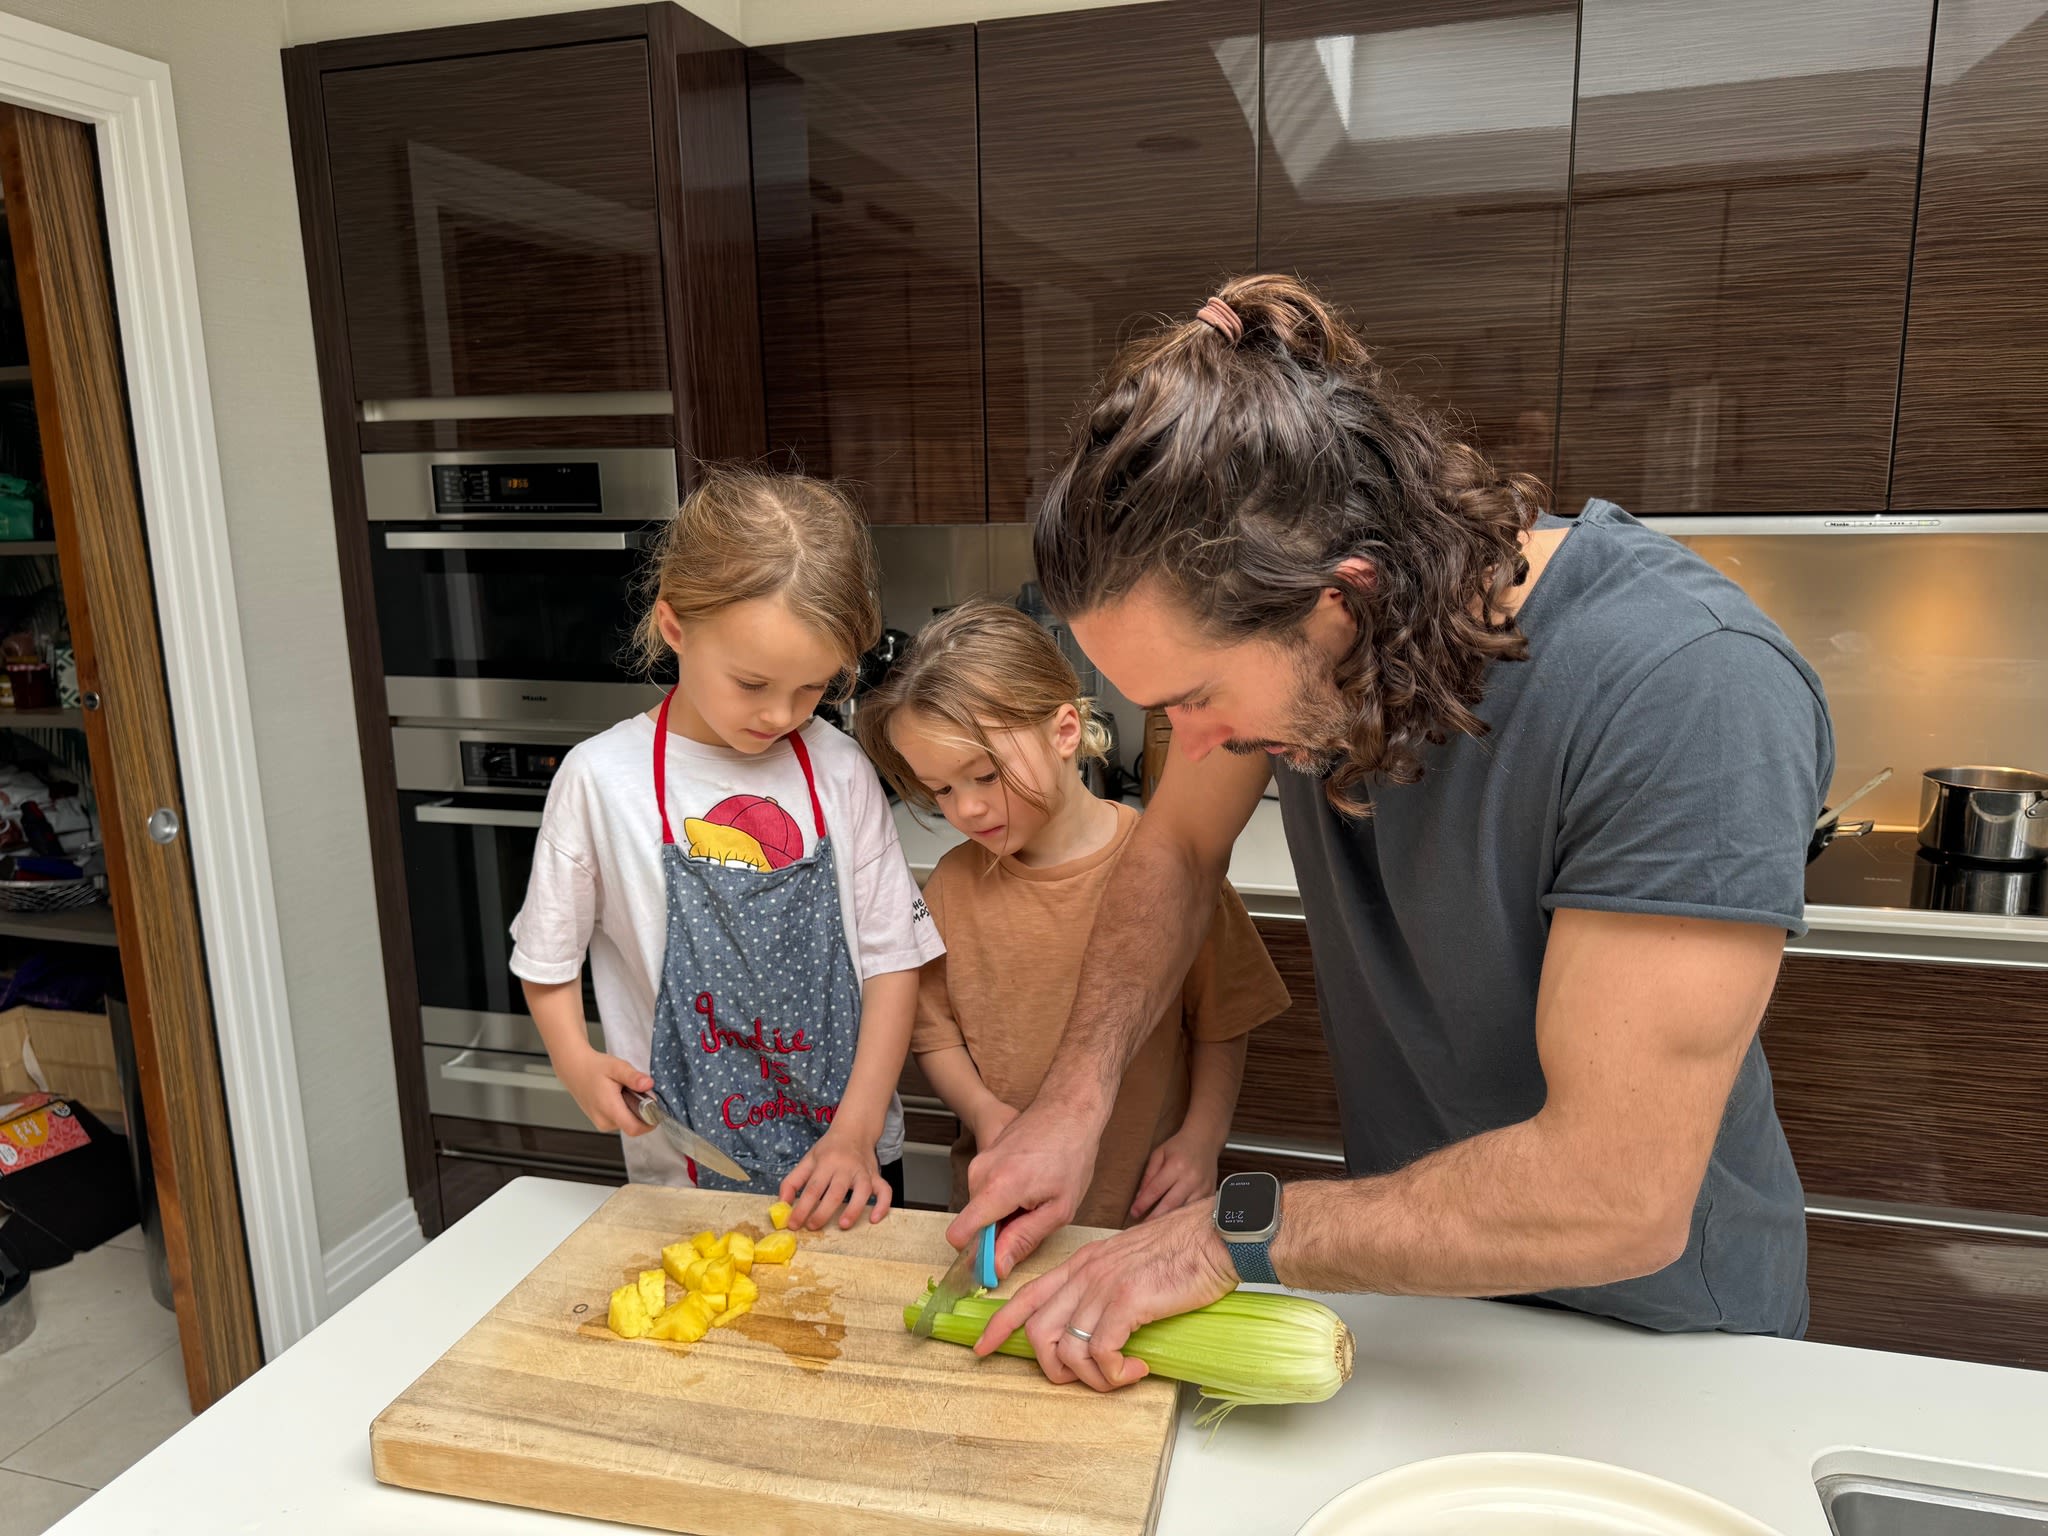 Joe Cooking With Kids